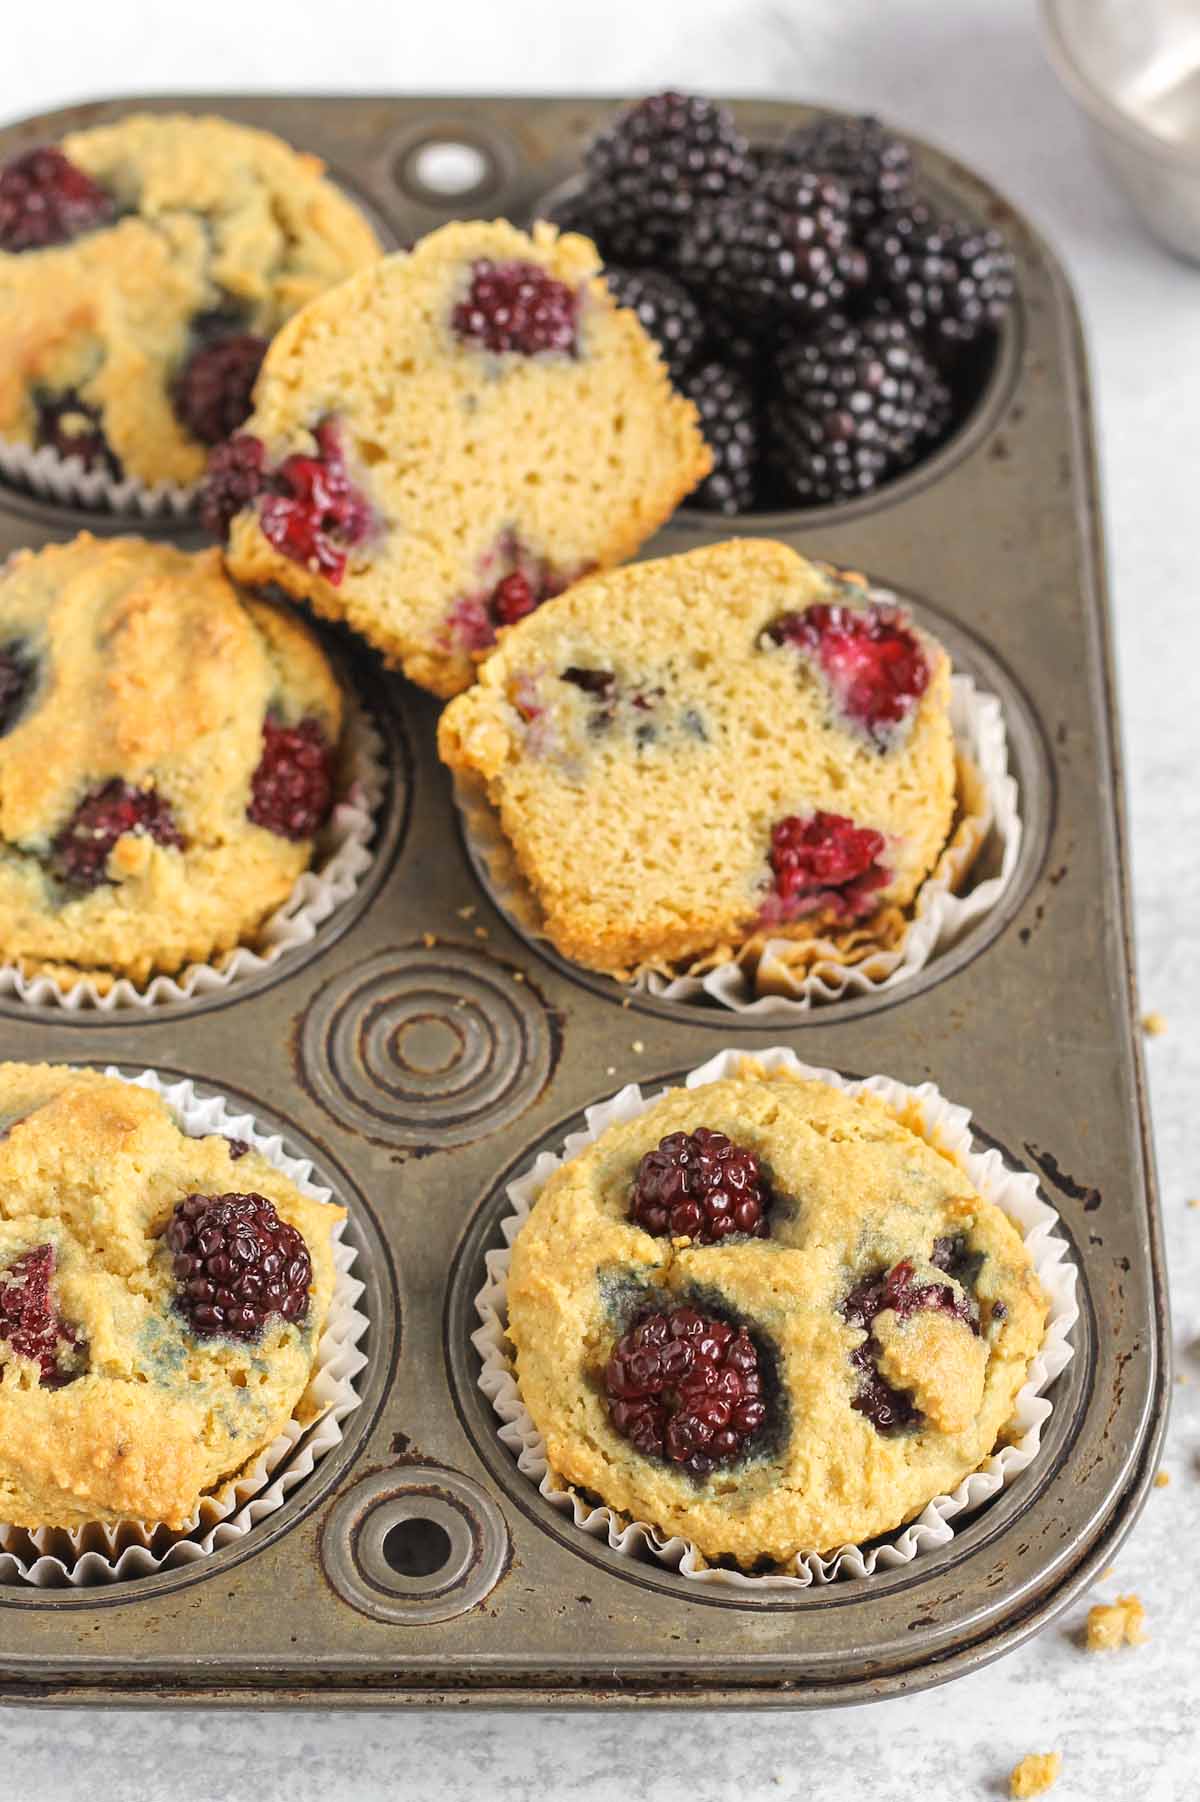 Blackberry almond flour muffins in a vintage muffin tin.